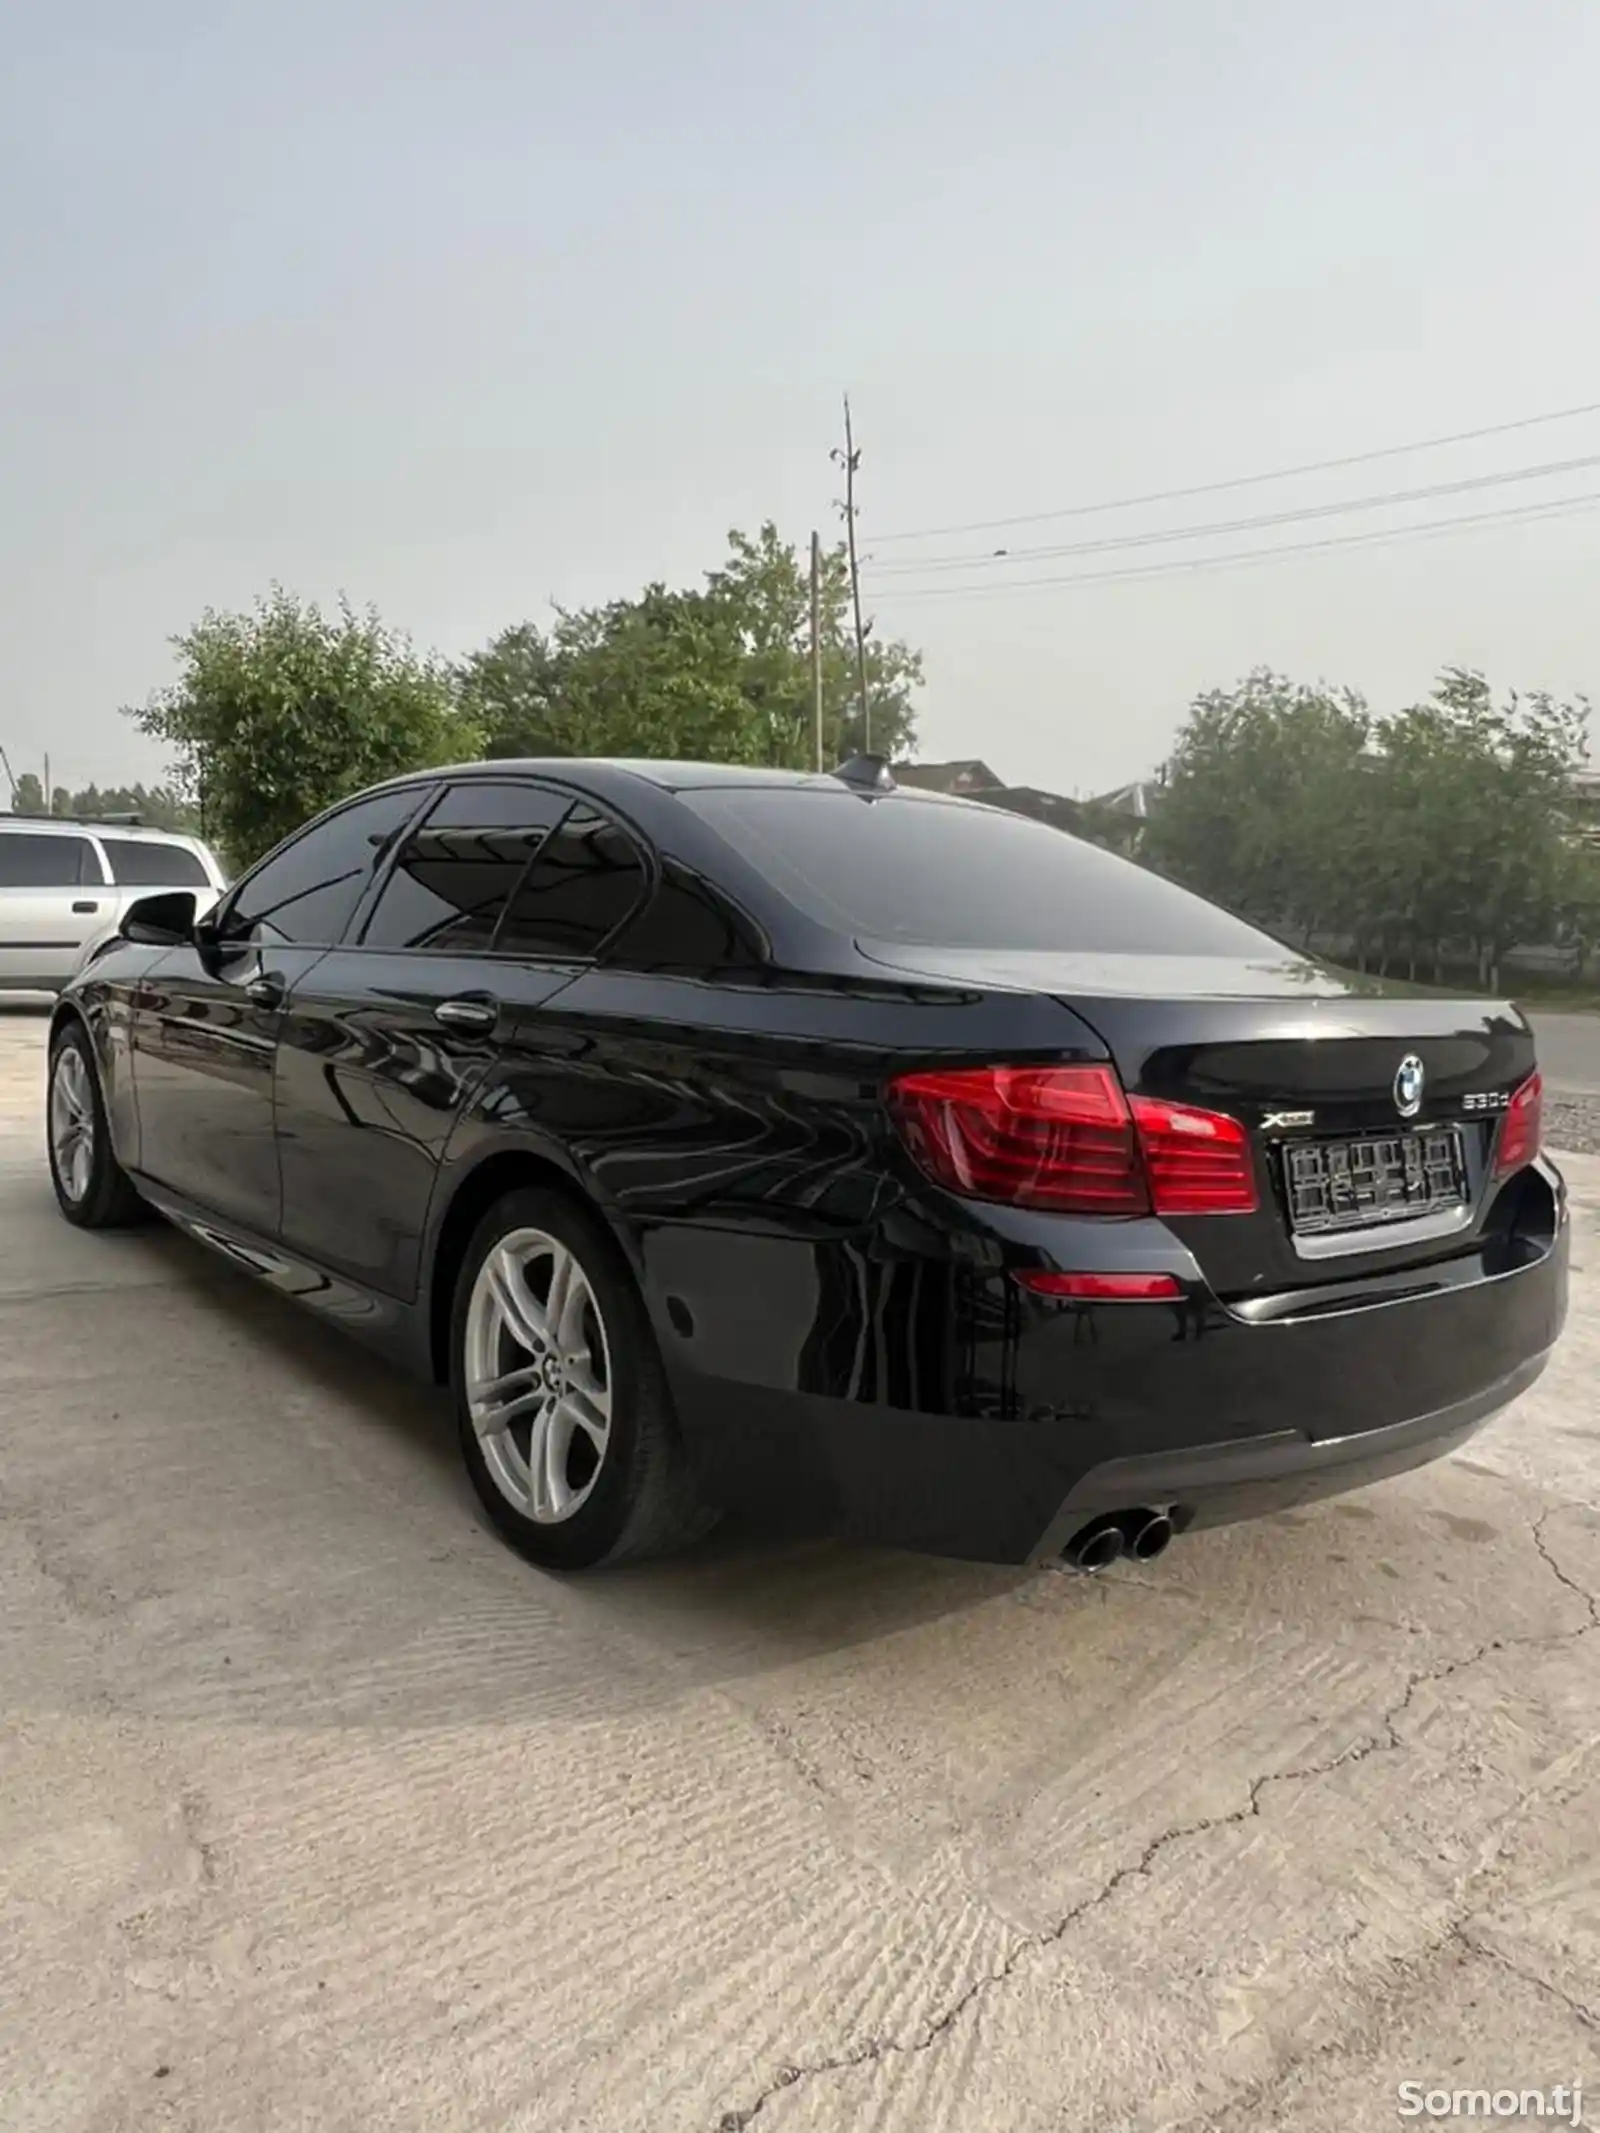 BMW 5 series, 2014-11